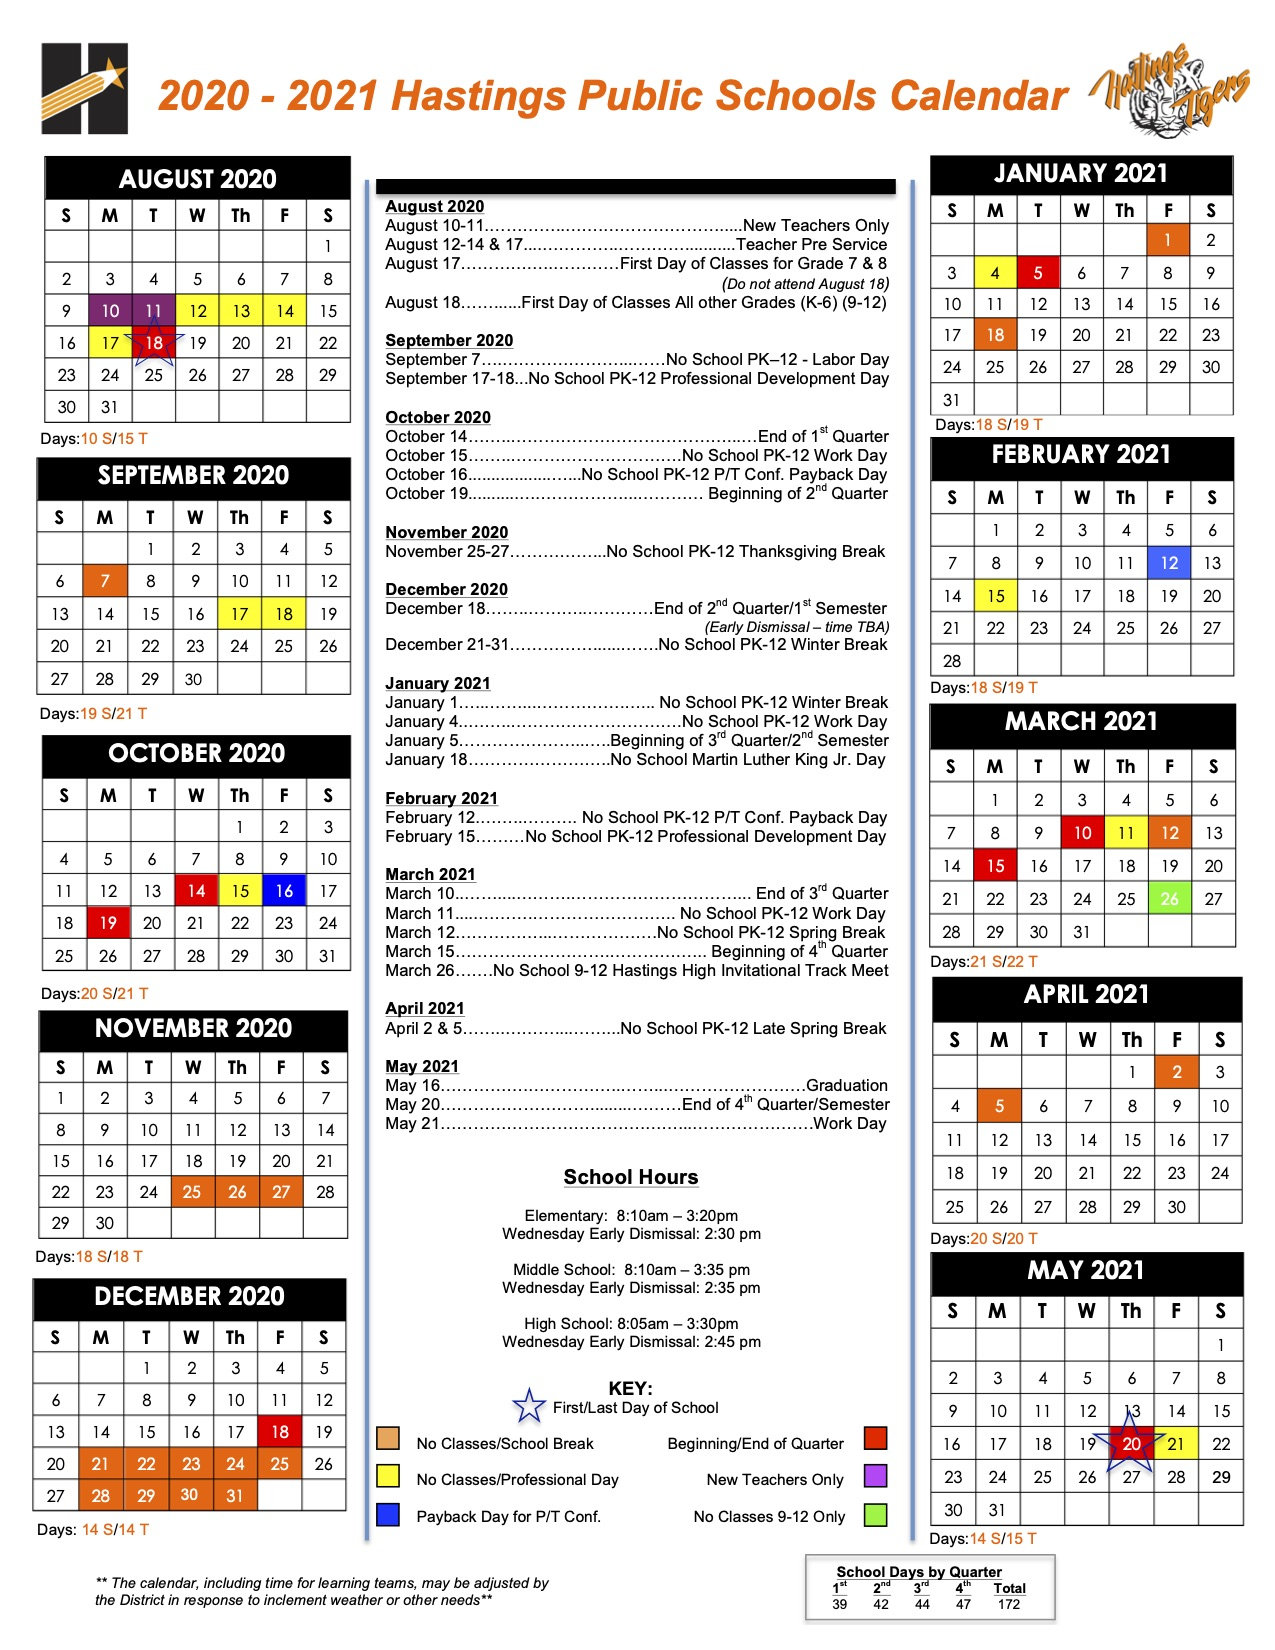 Days Of Attendance Calendar - Hastings Public Schools